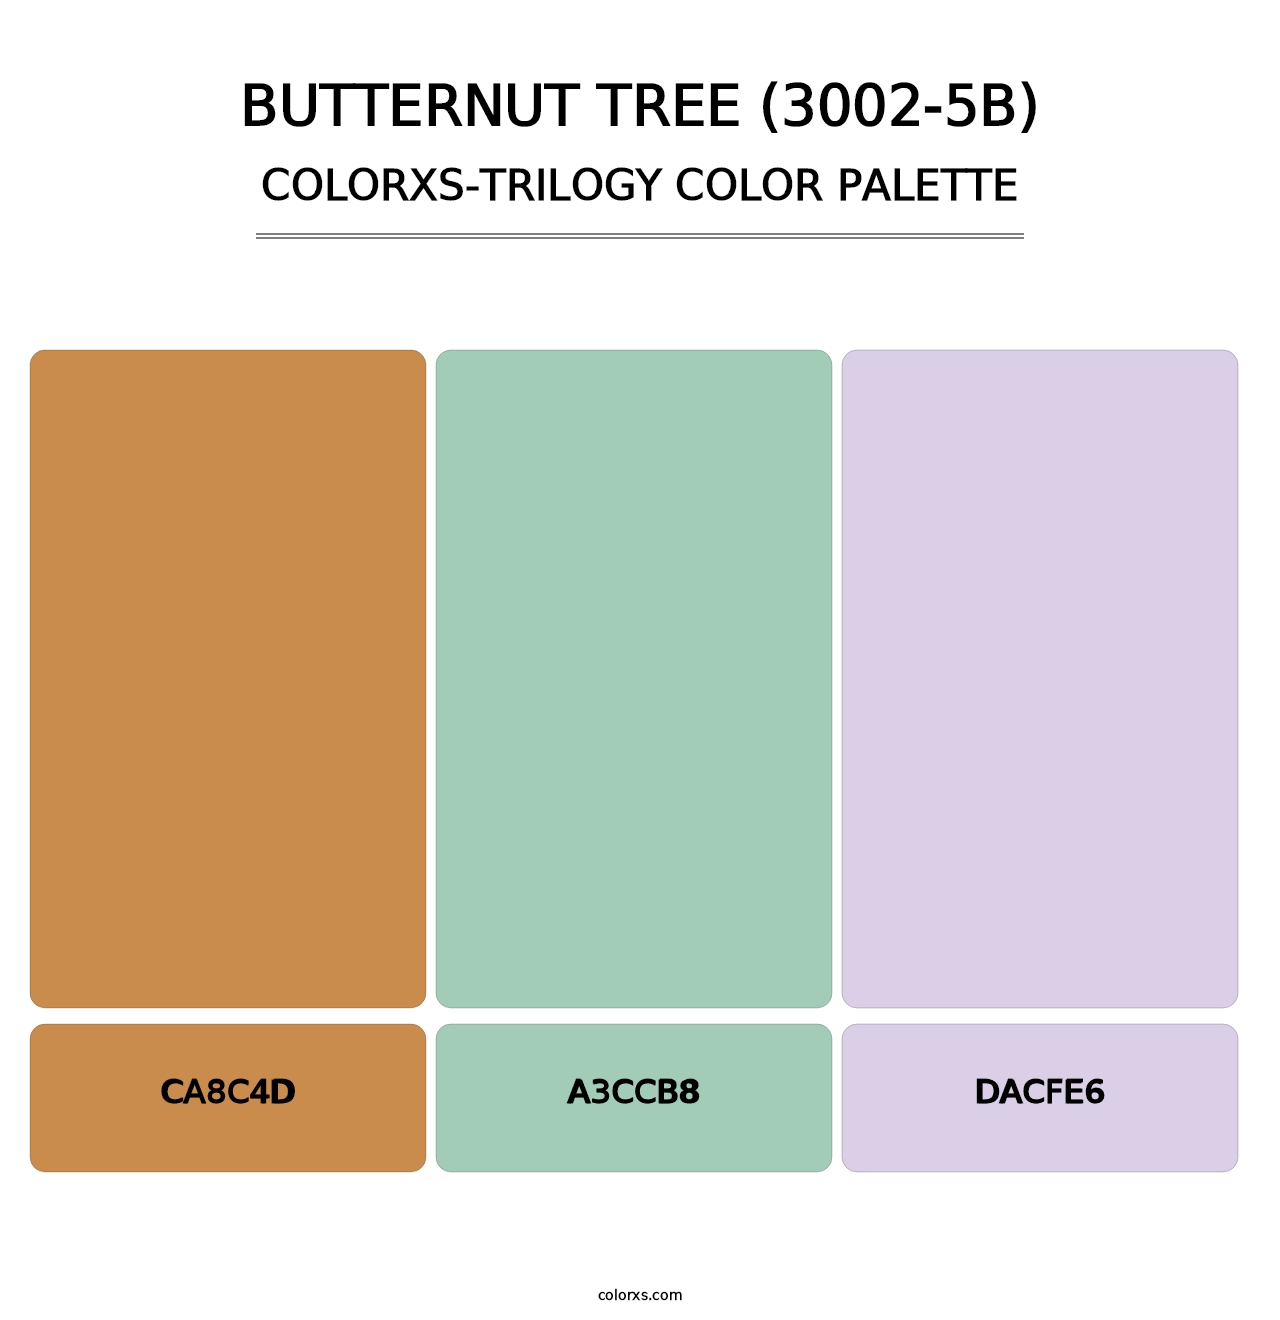 Butternut Tree (3002-5B) - Colorxs Trilogy Palette